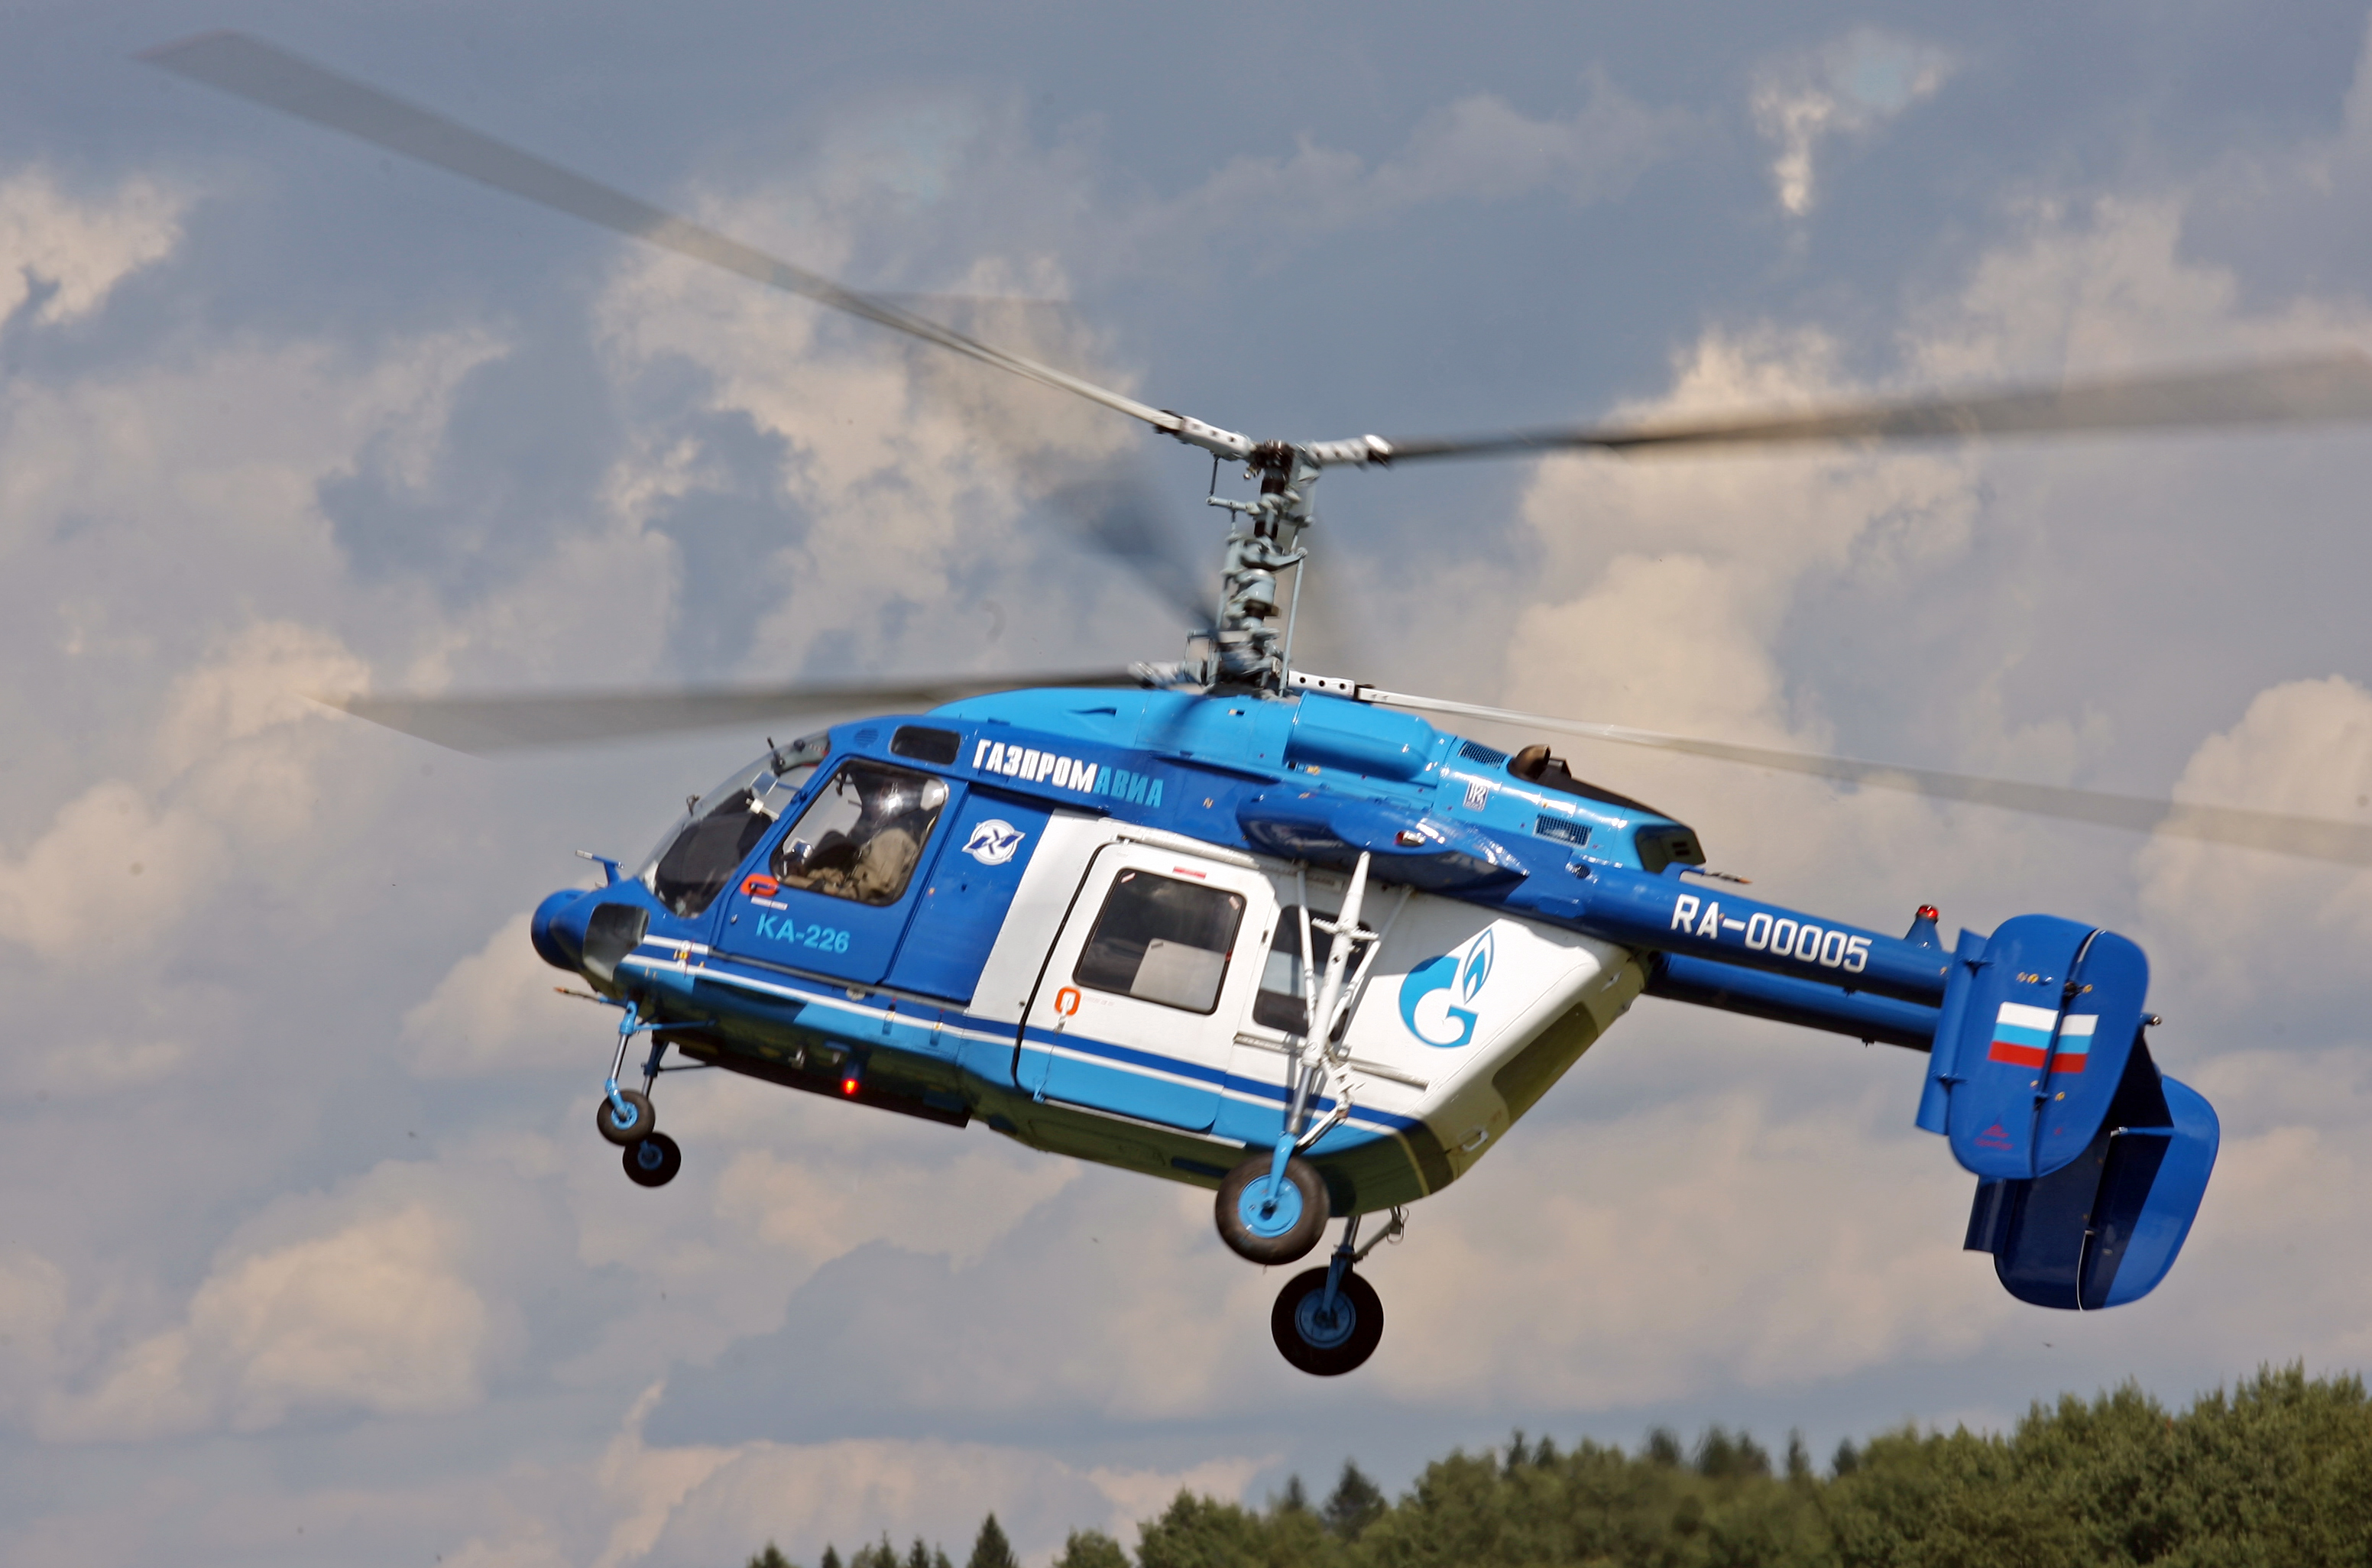 Ka-226 helicopter. Source: Global Look Press